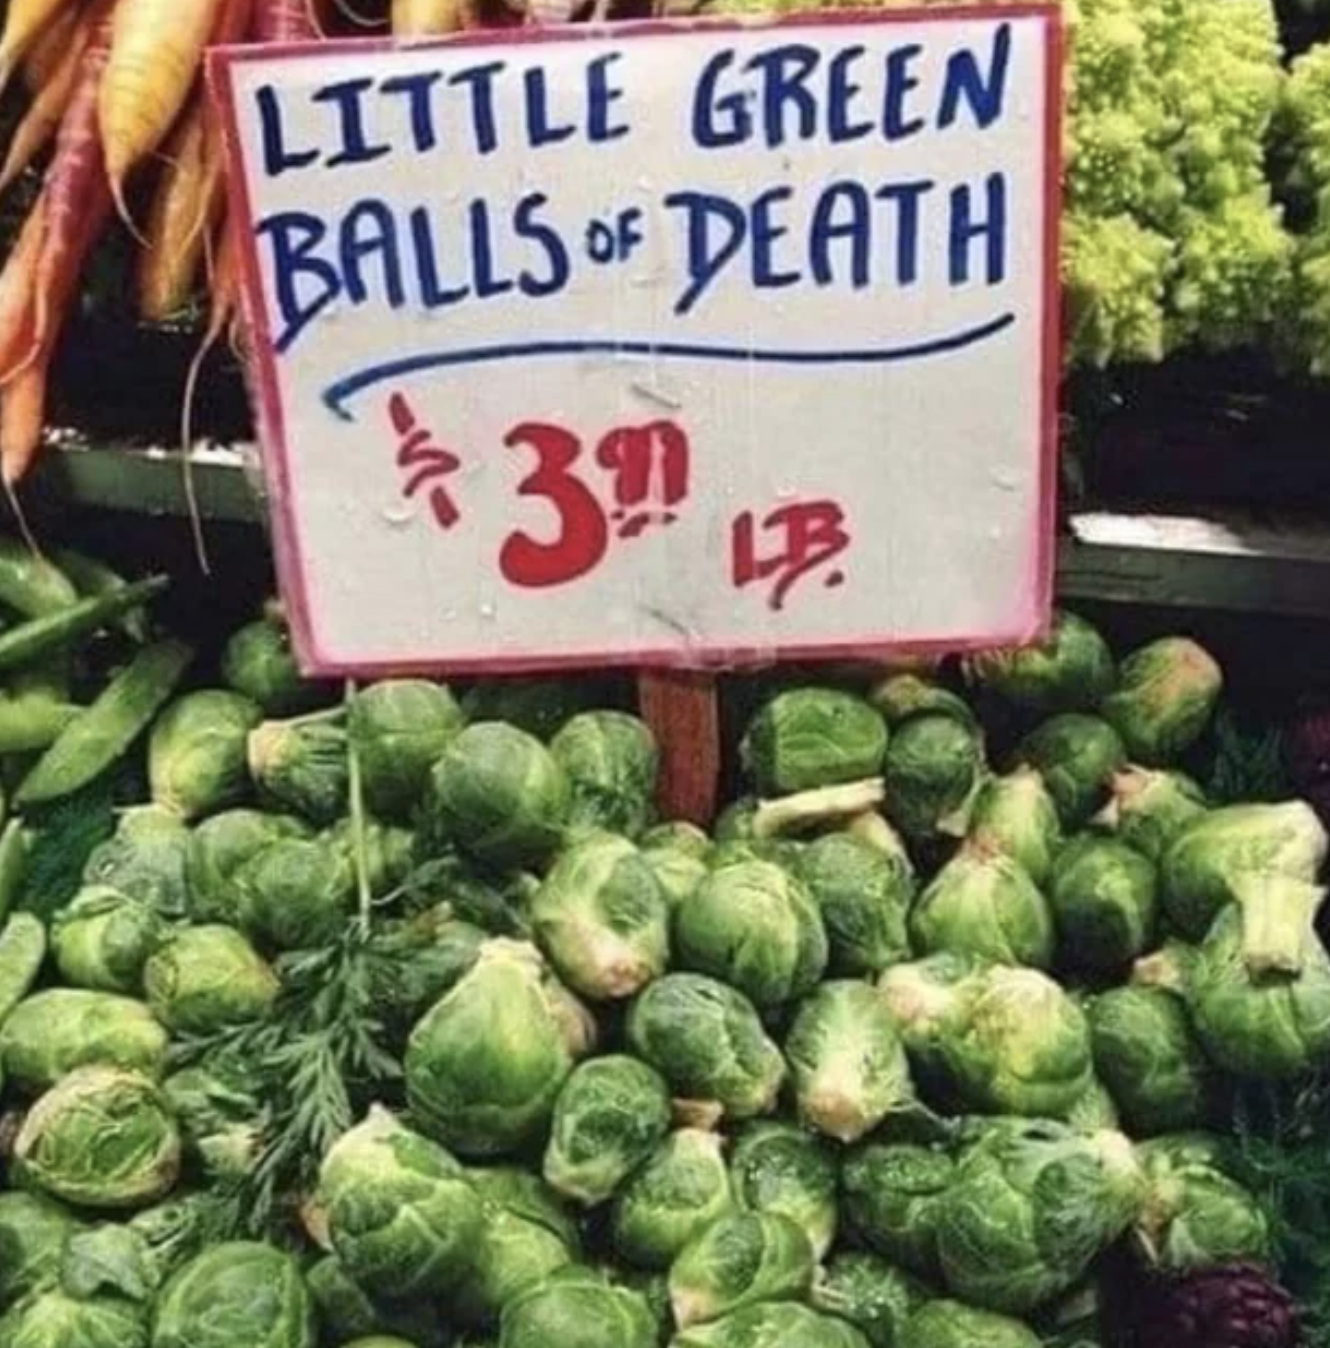 &quot;Little green balls of death&quot;